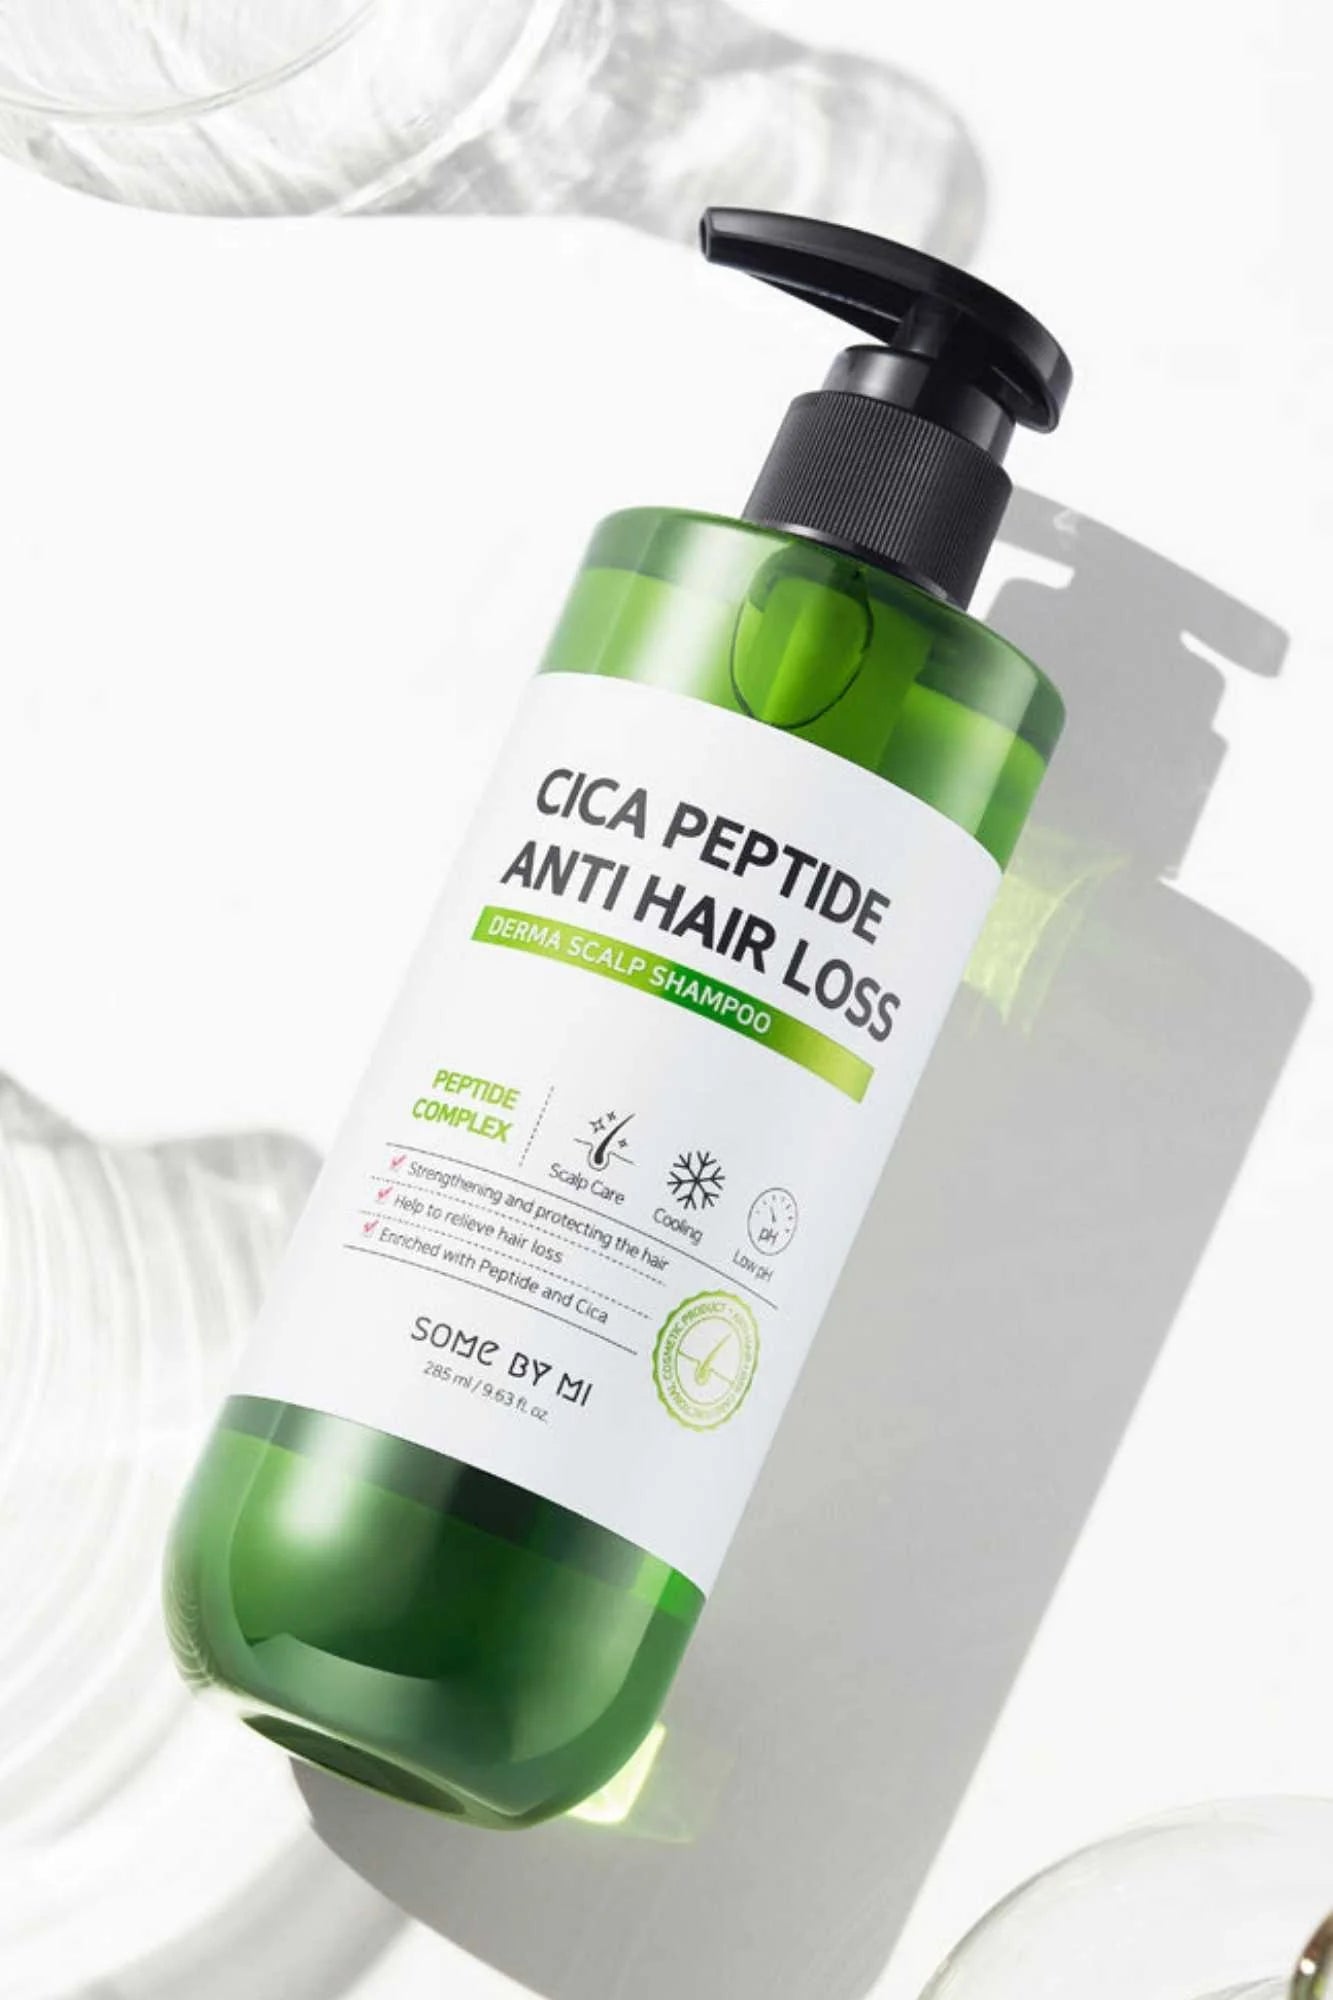 SOME BY MI Cica Peptide Anti Hair Loss Derma Scalp Shampoo 285ml - DODOSKIN